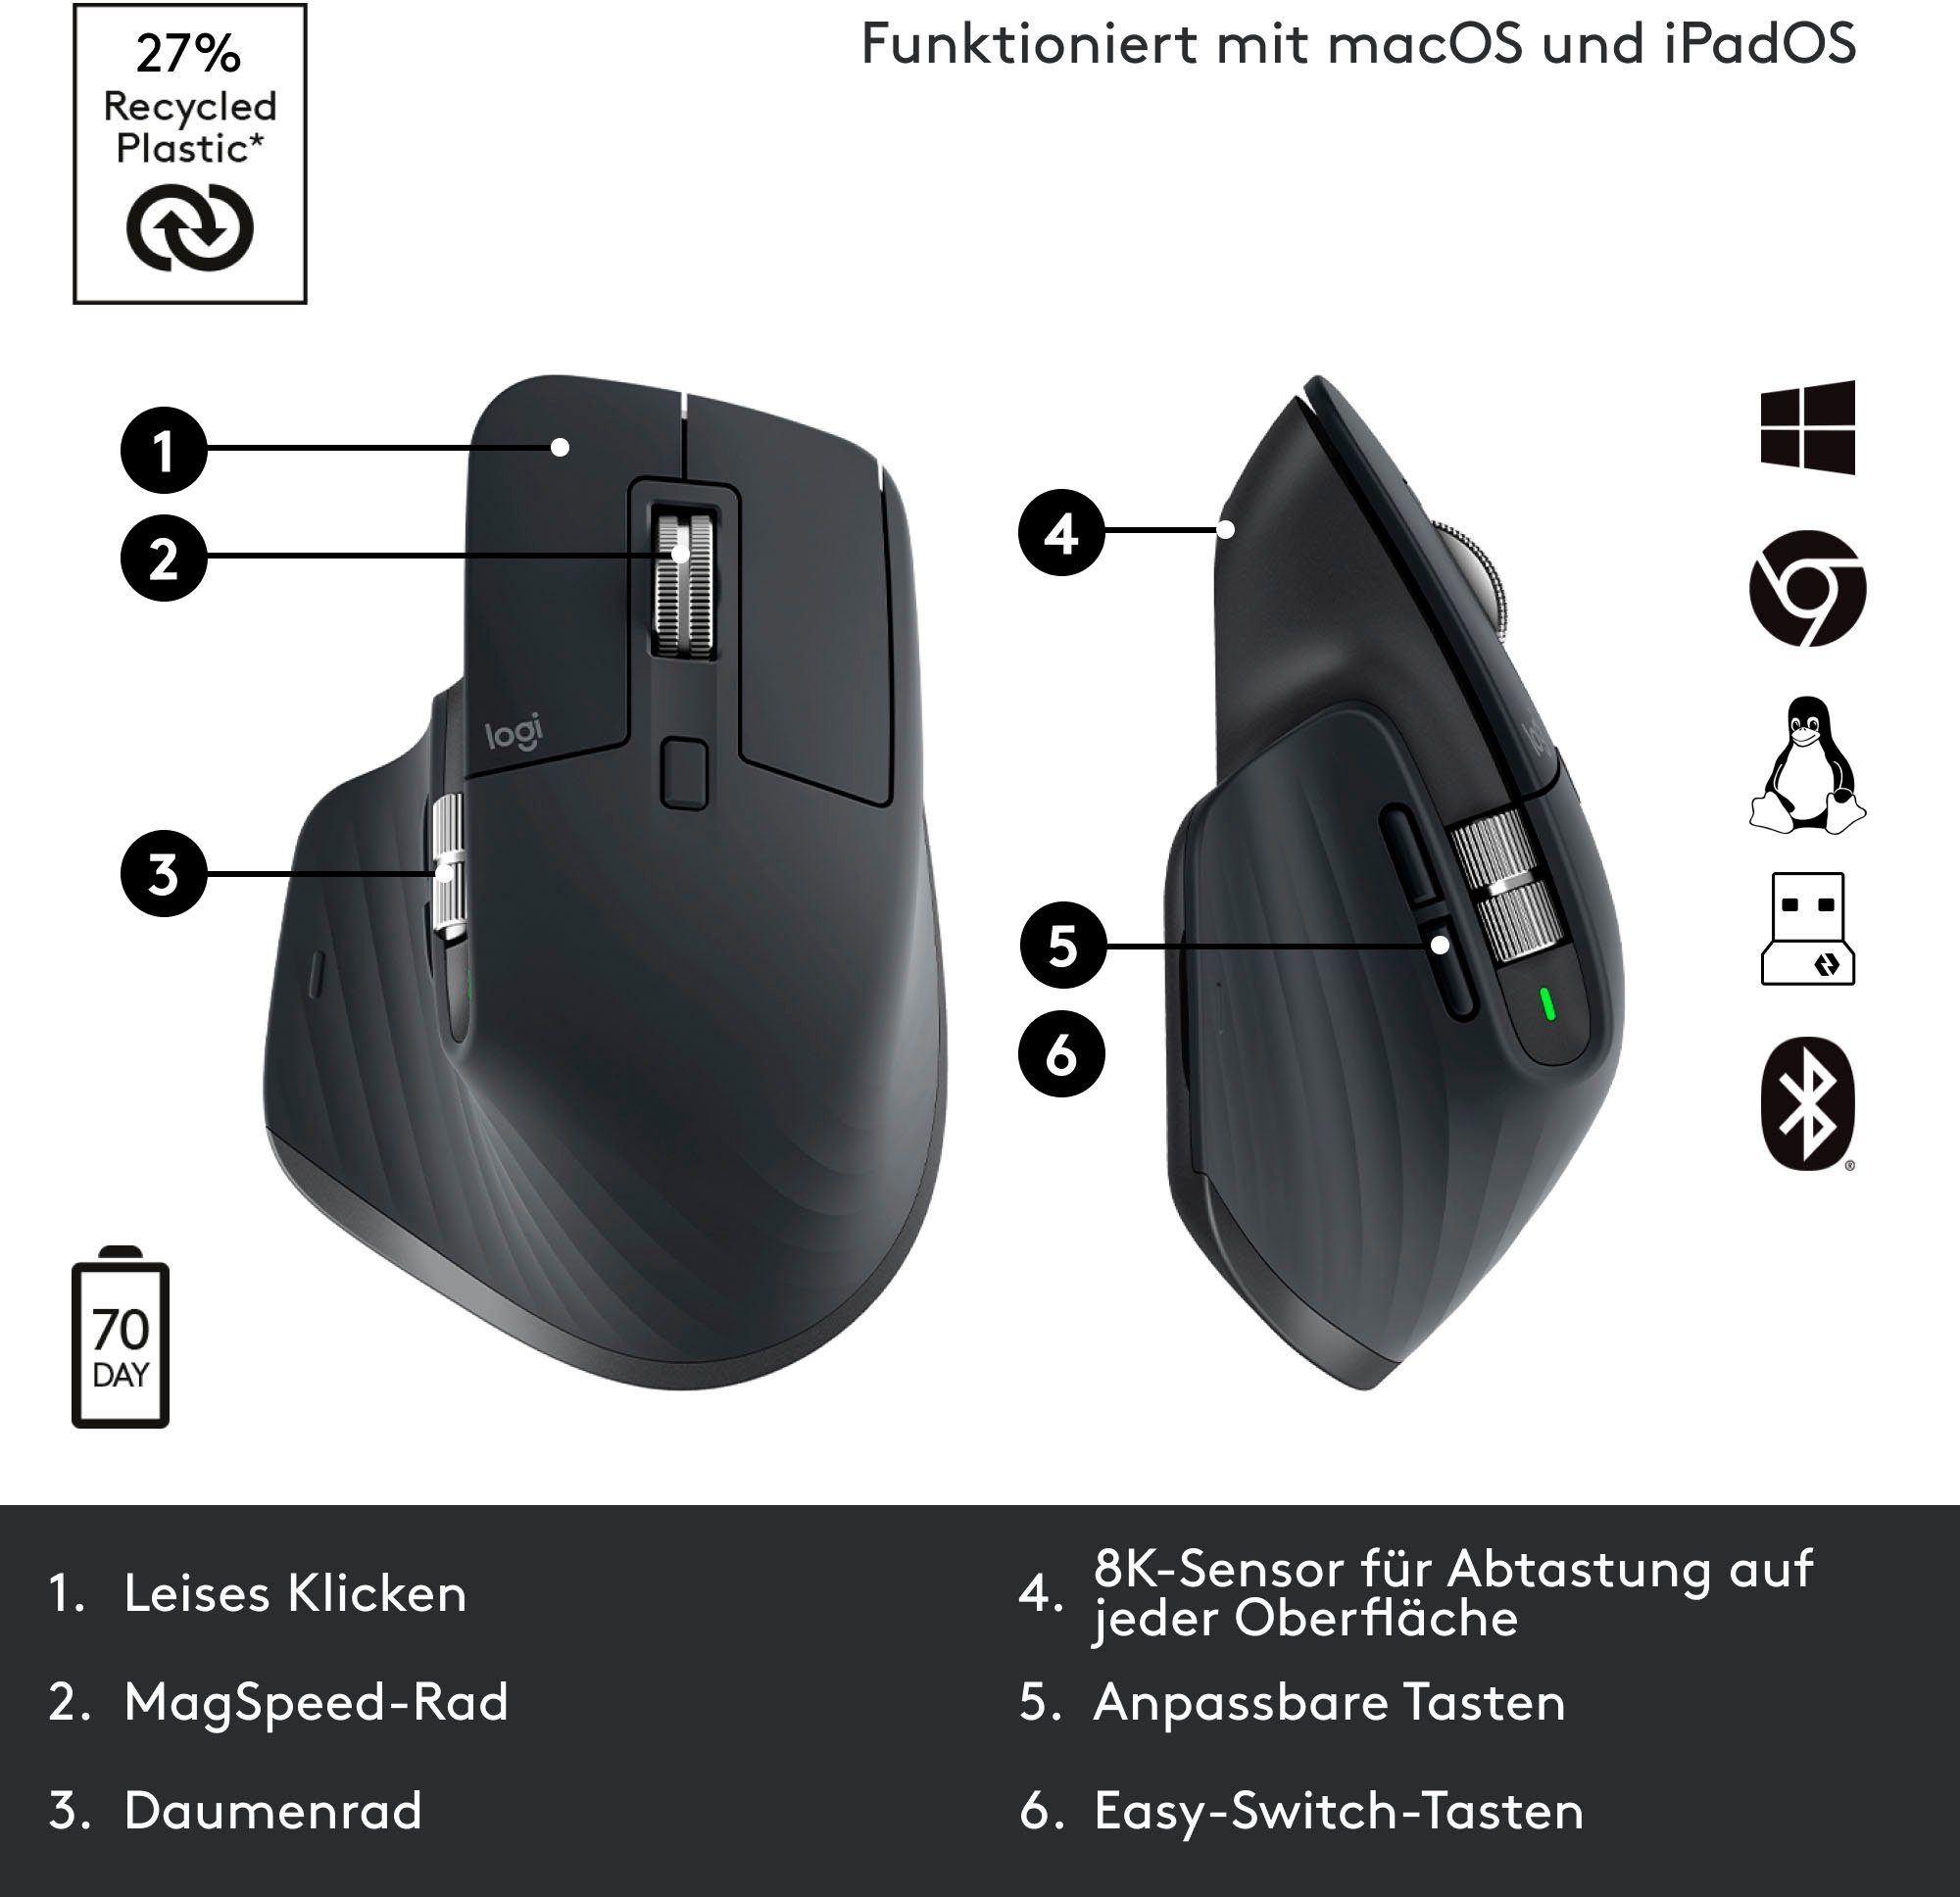 Maus Grau Master 3S (Bluetooth) MX Logitech